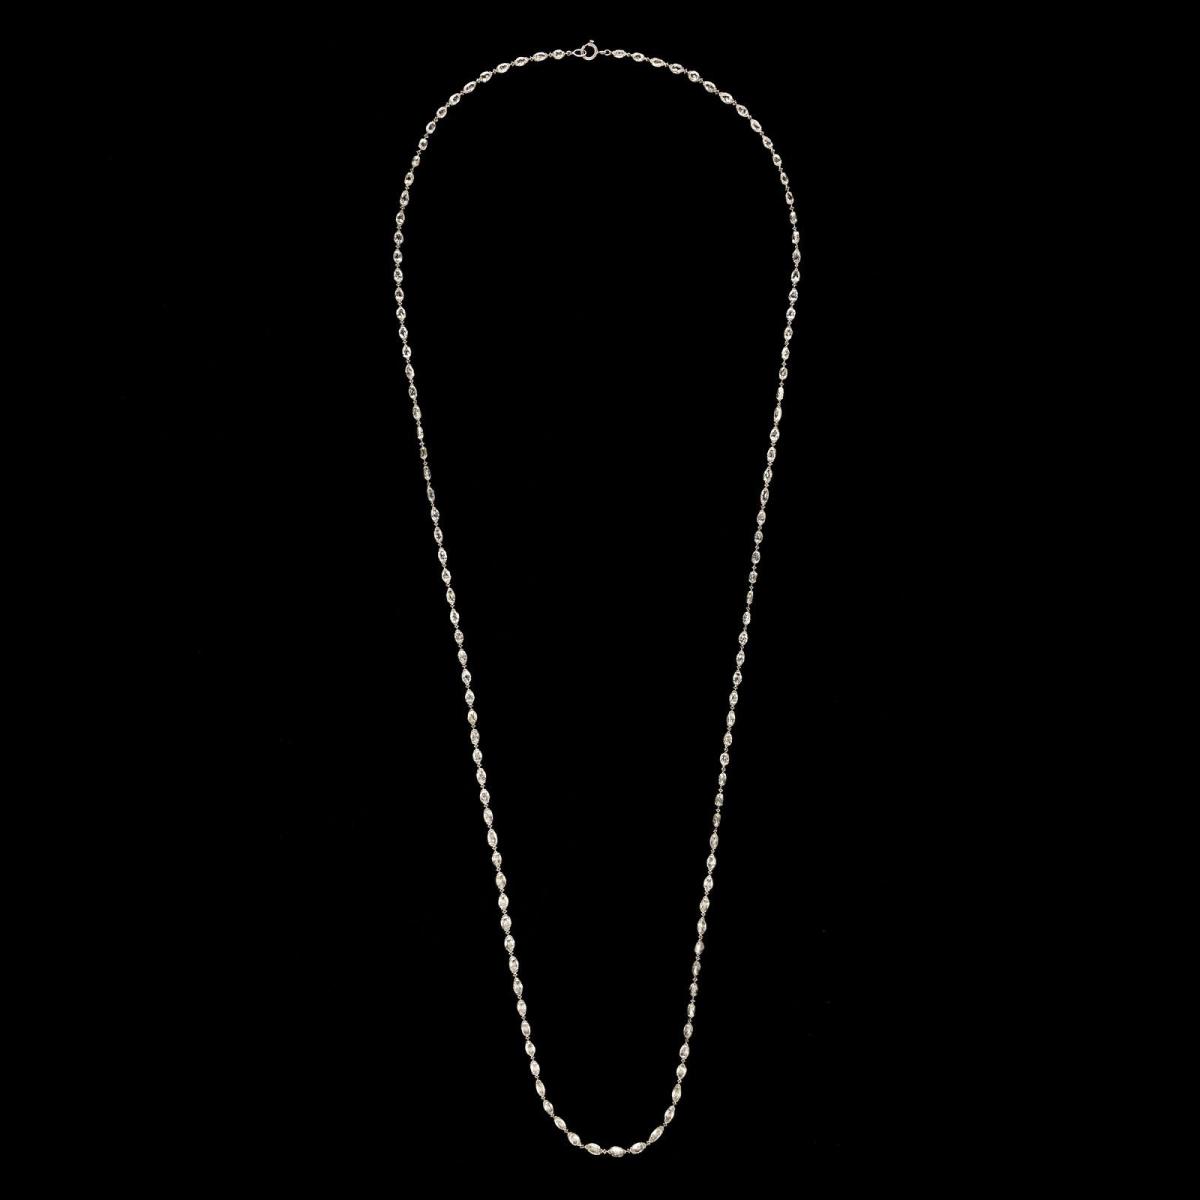 Hancocks Briolette Diamond And Platinum Necklace Set With 22.99cts